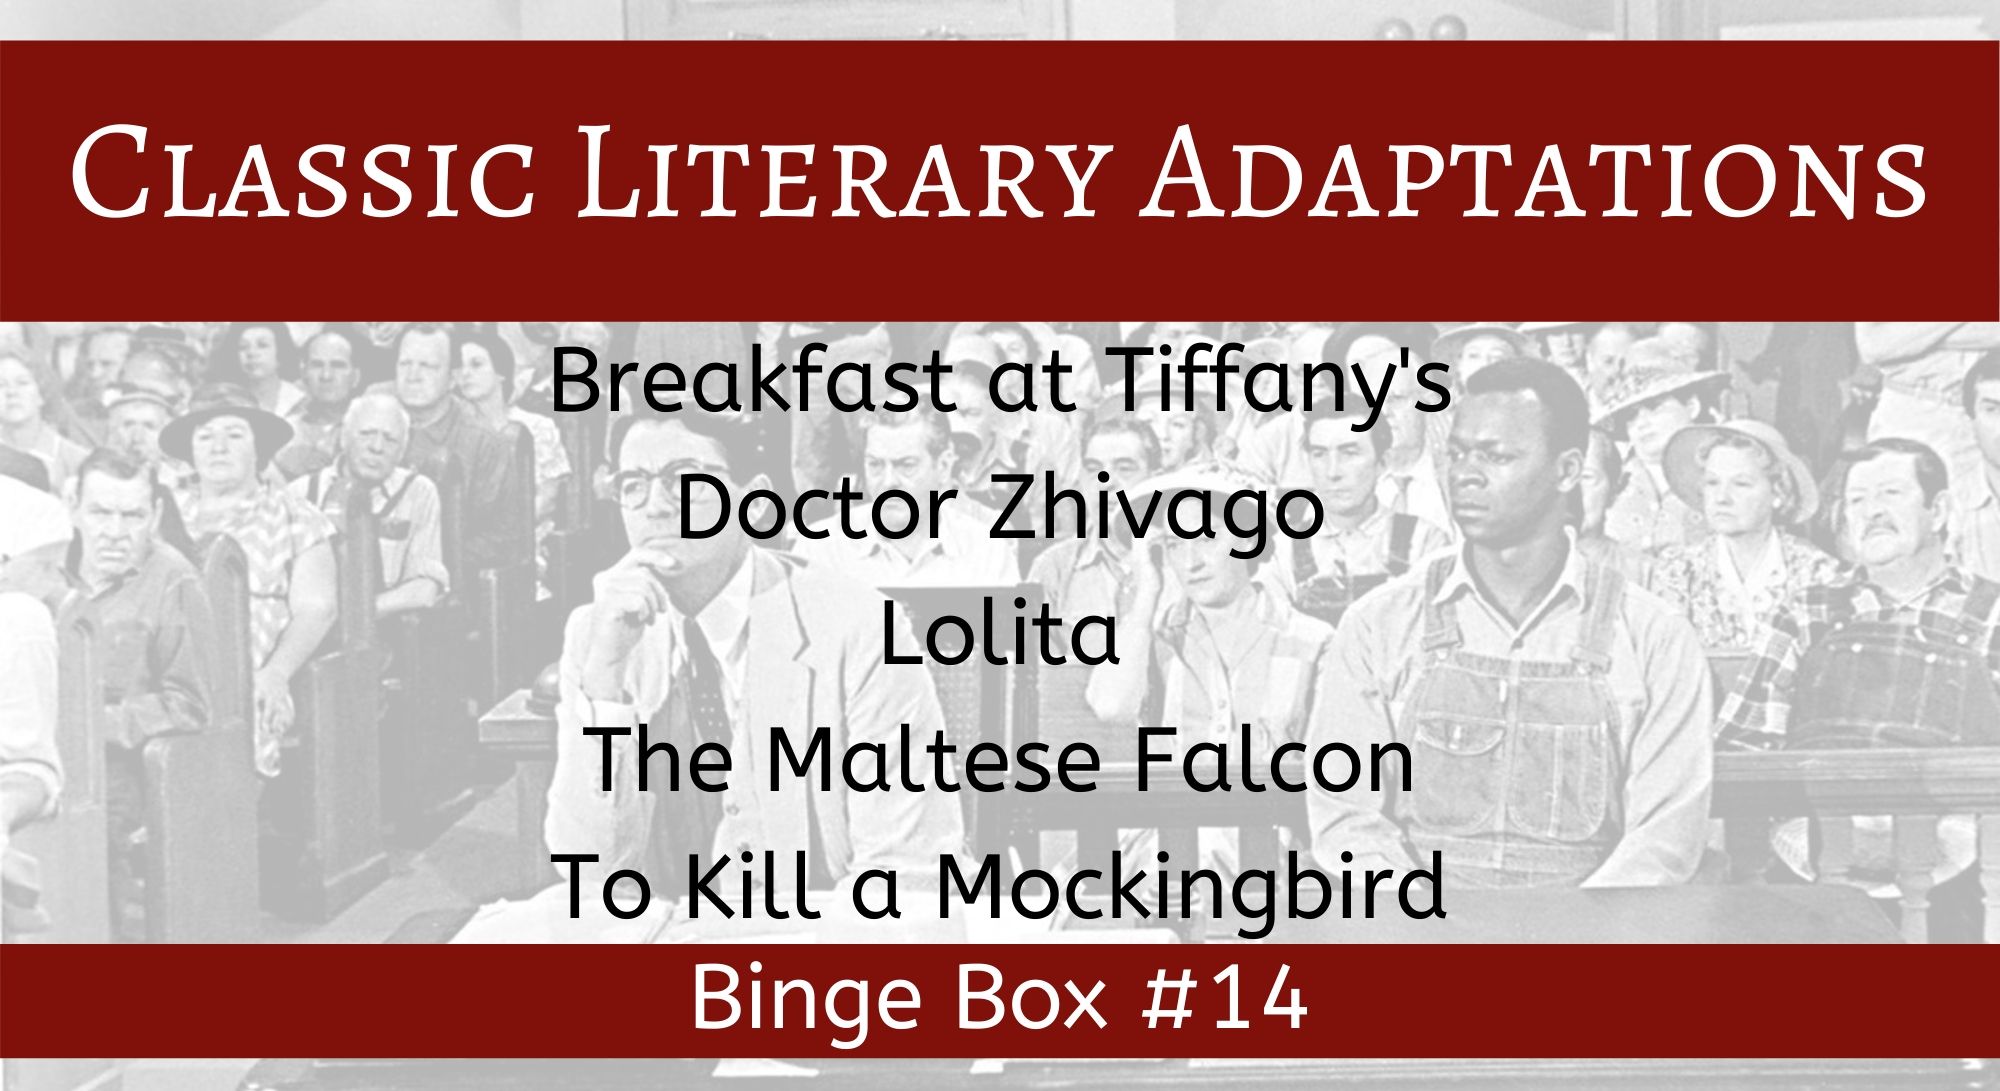 Classic Literary Adaptations Binge Box